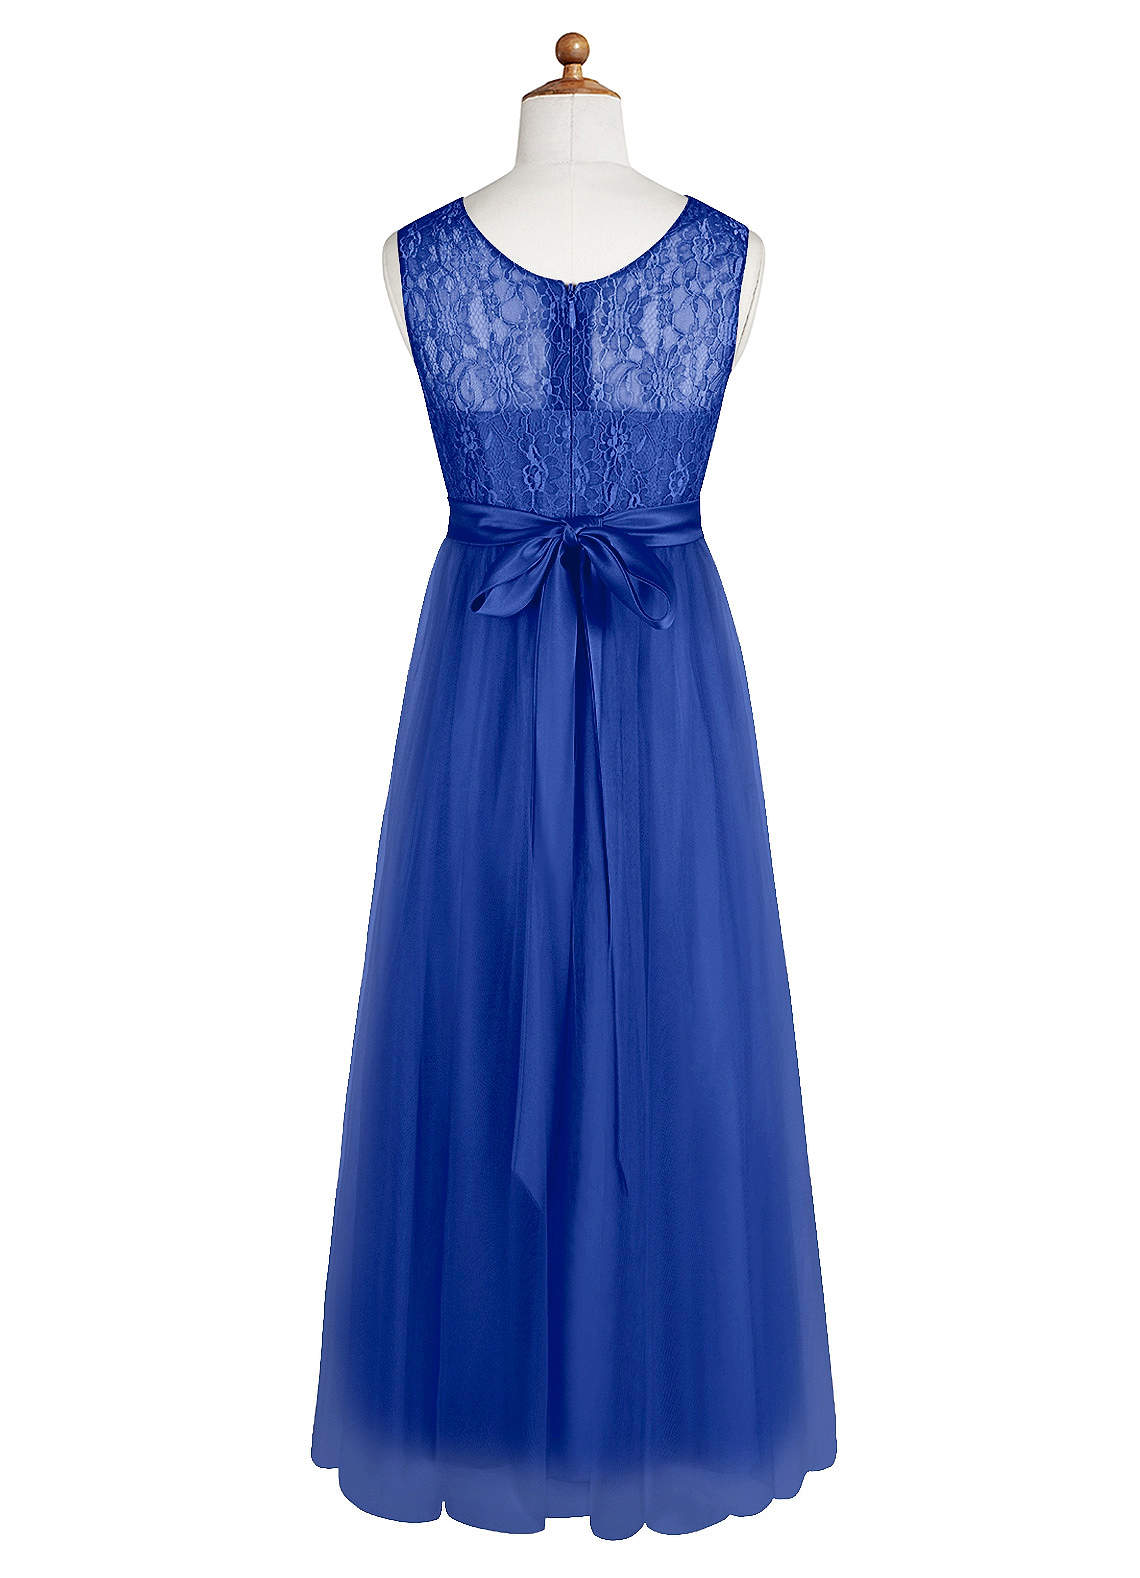 Azazie Georgette A-Line Lace Tulle Floor-Length Dress image1